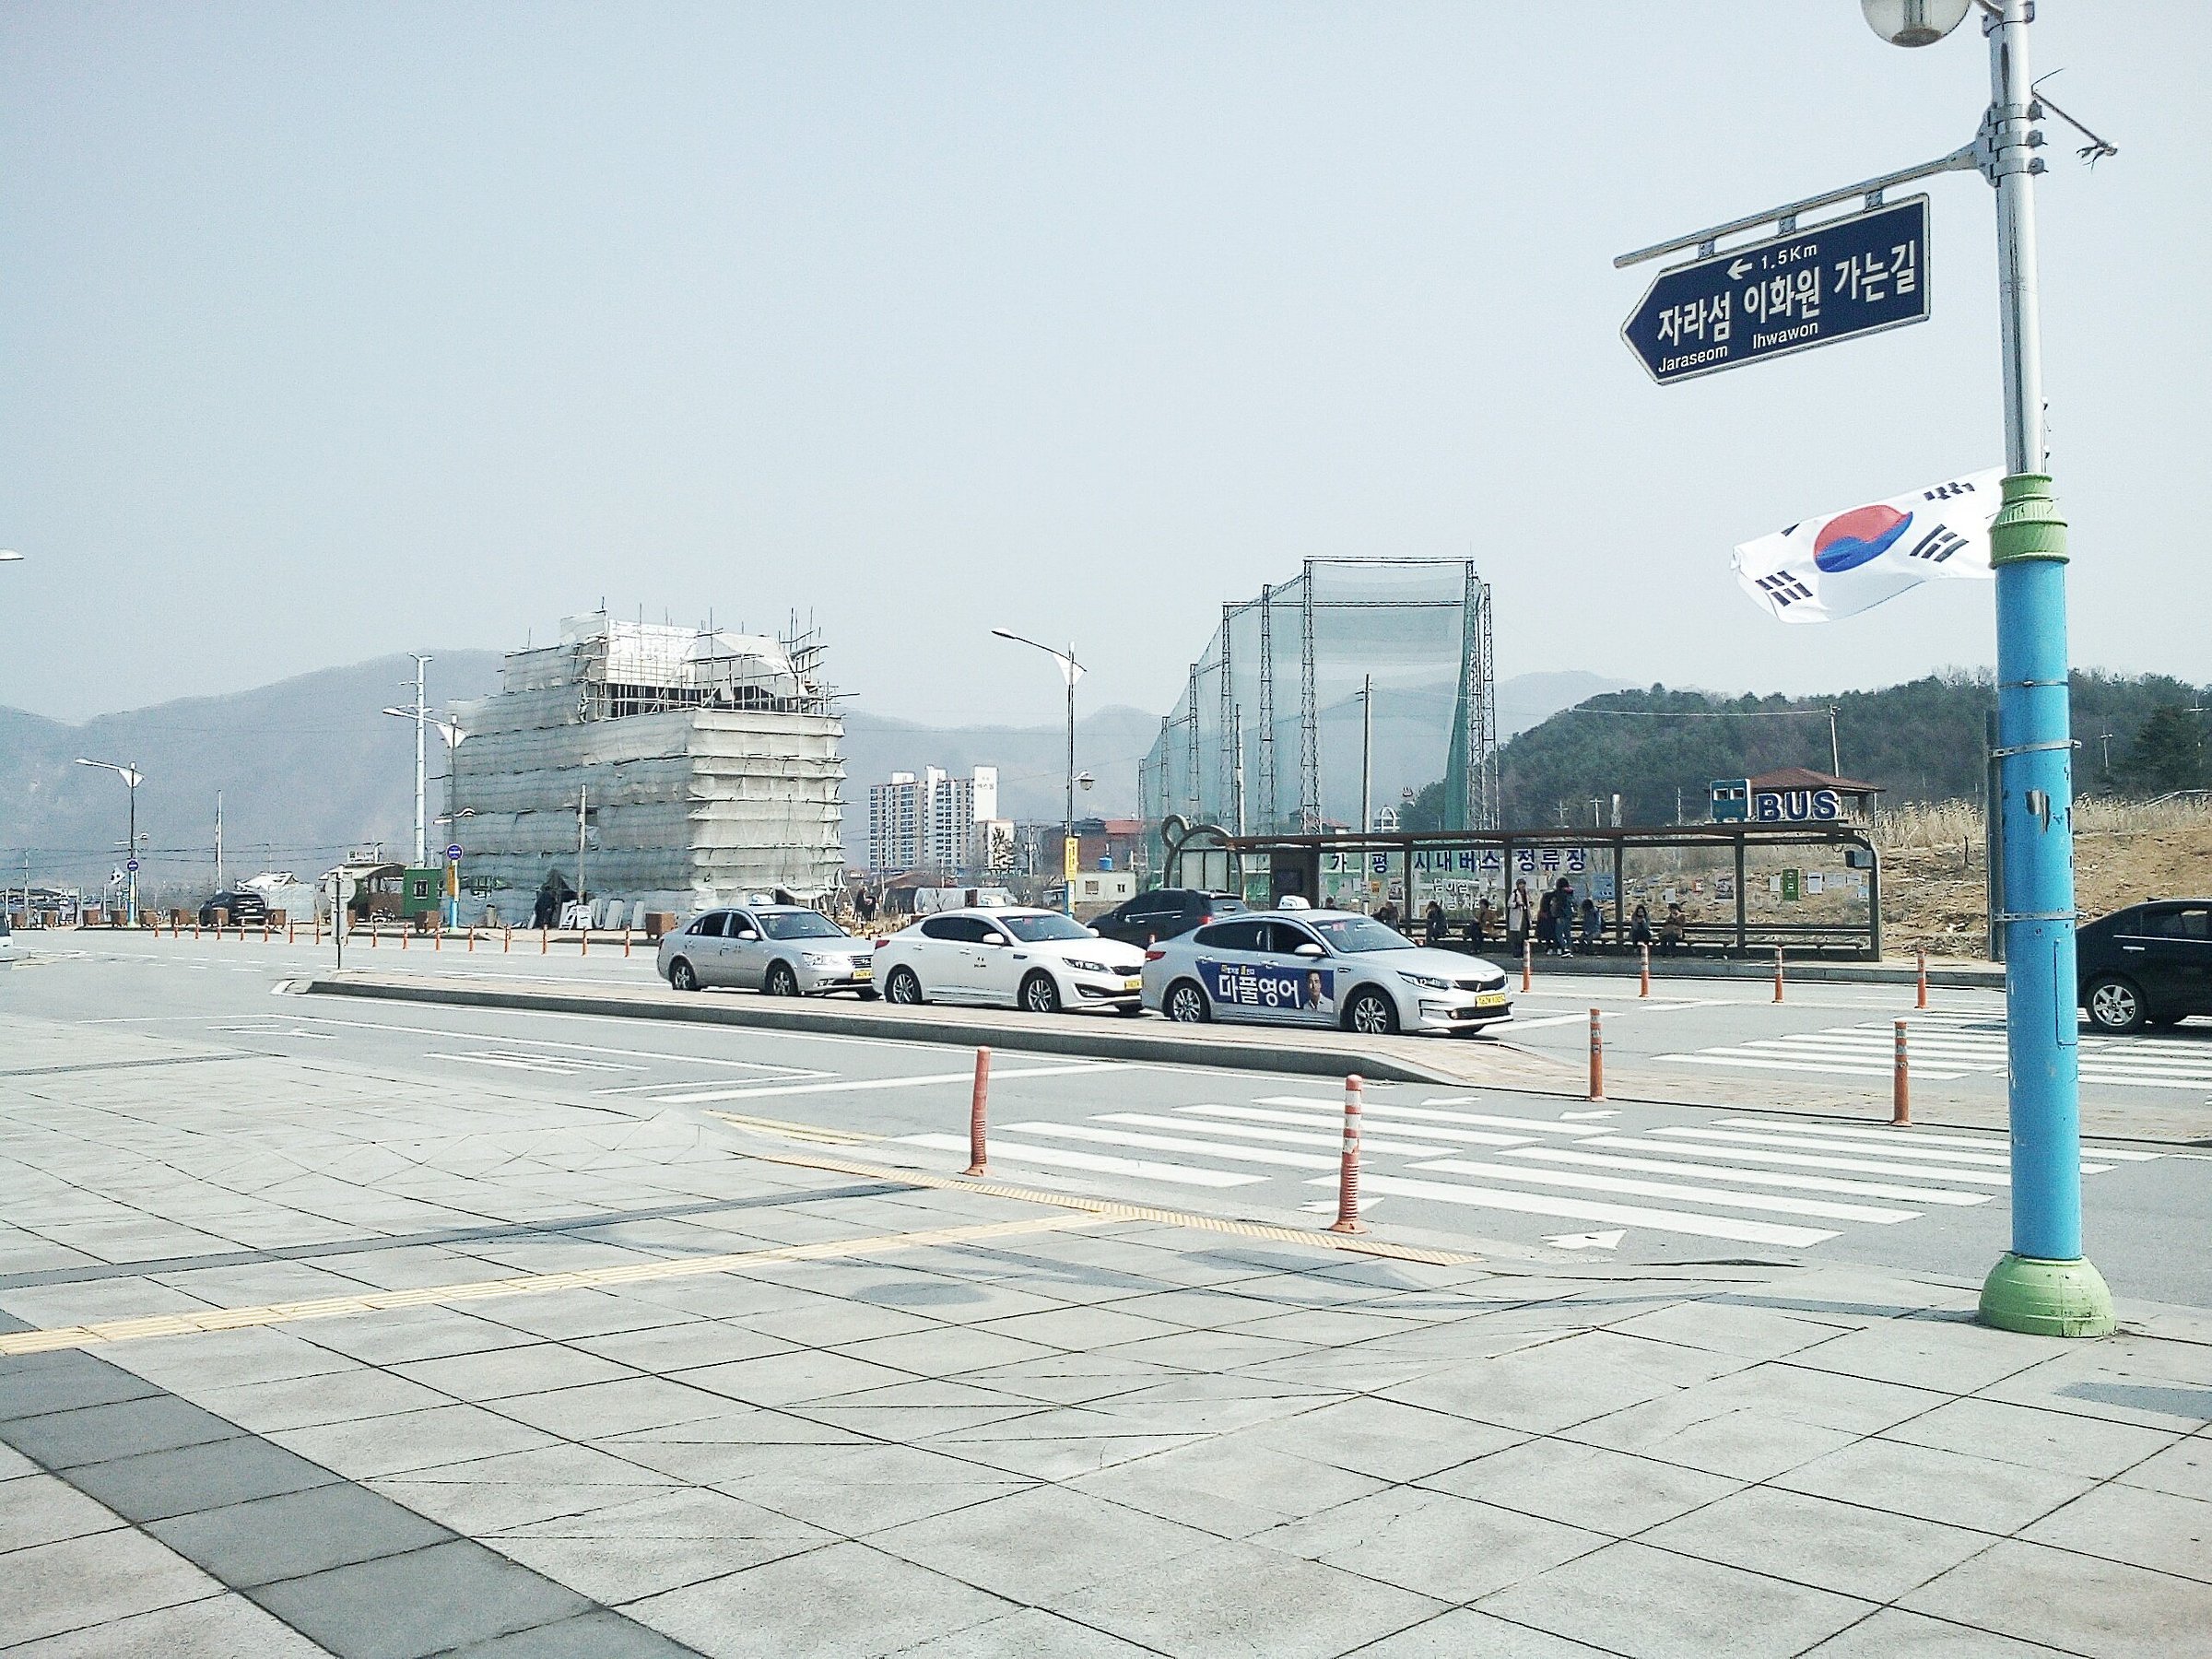 gapyeong tourist bus